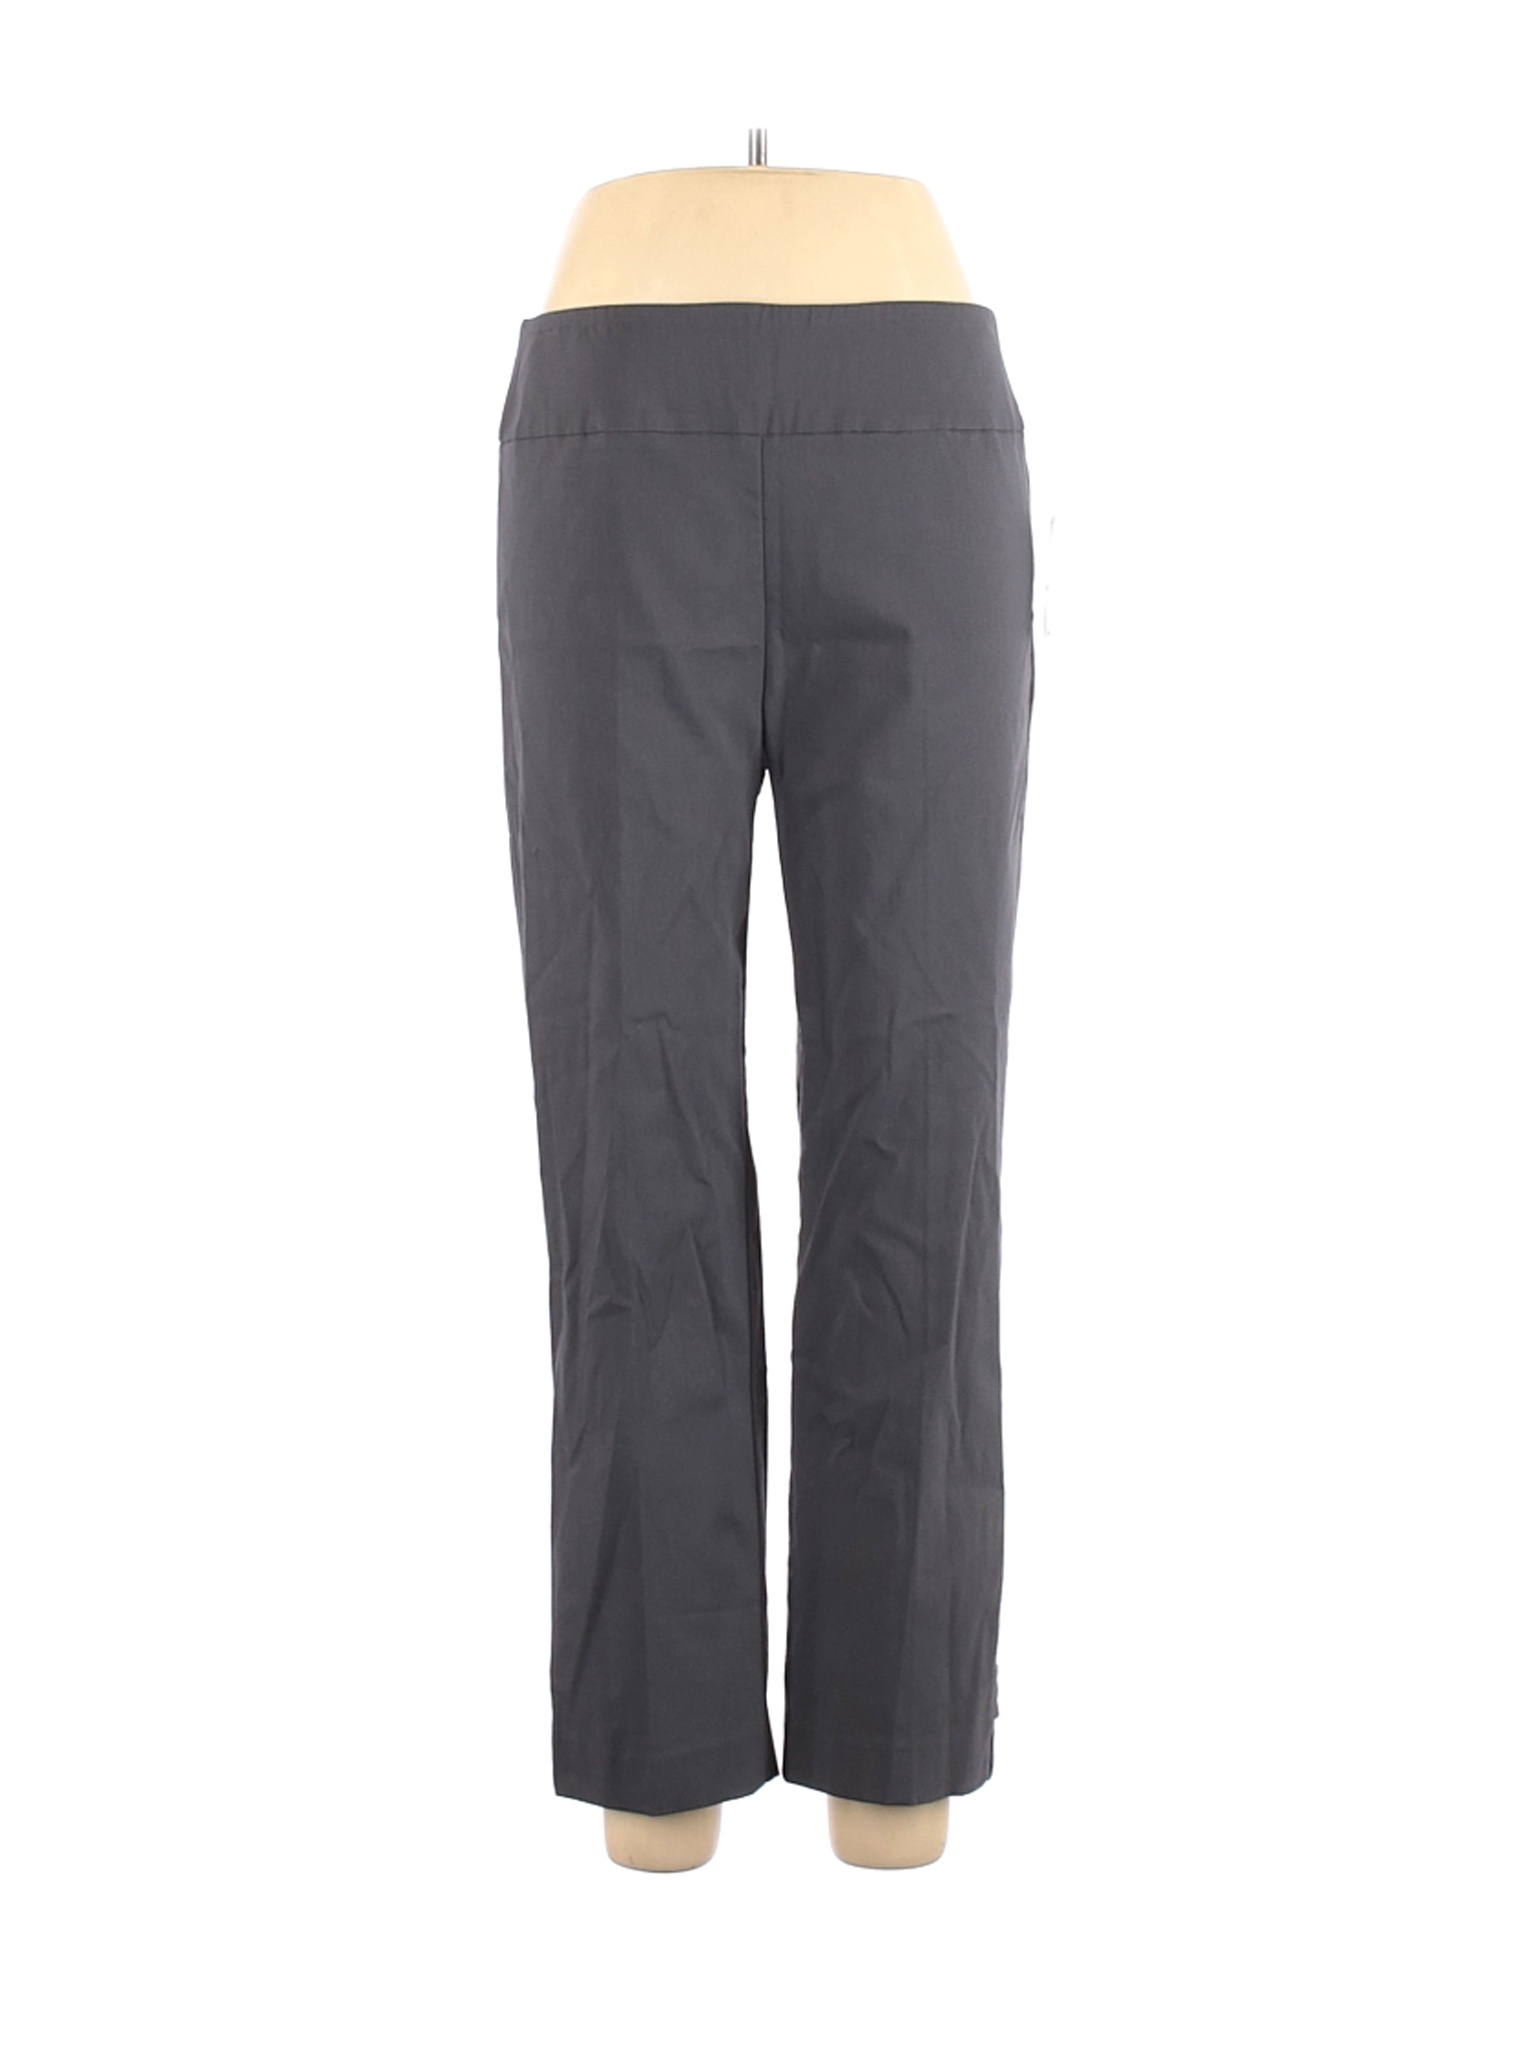 NWT Elliott Lauren Women Gray Dress Pants 12 | eBay